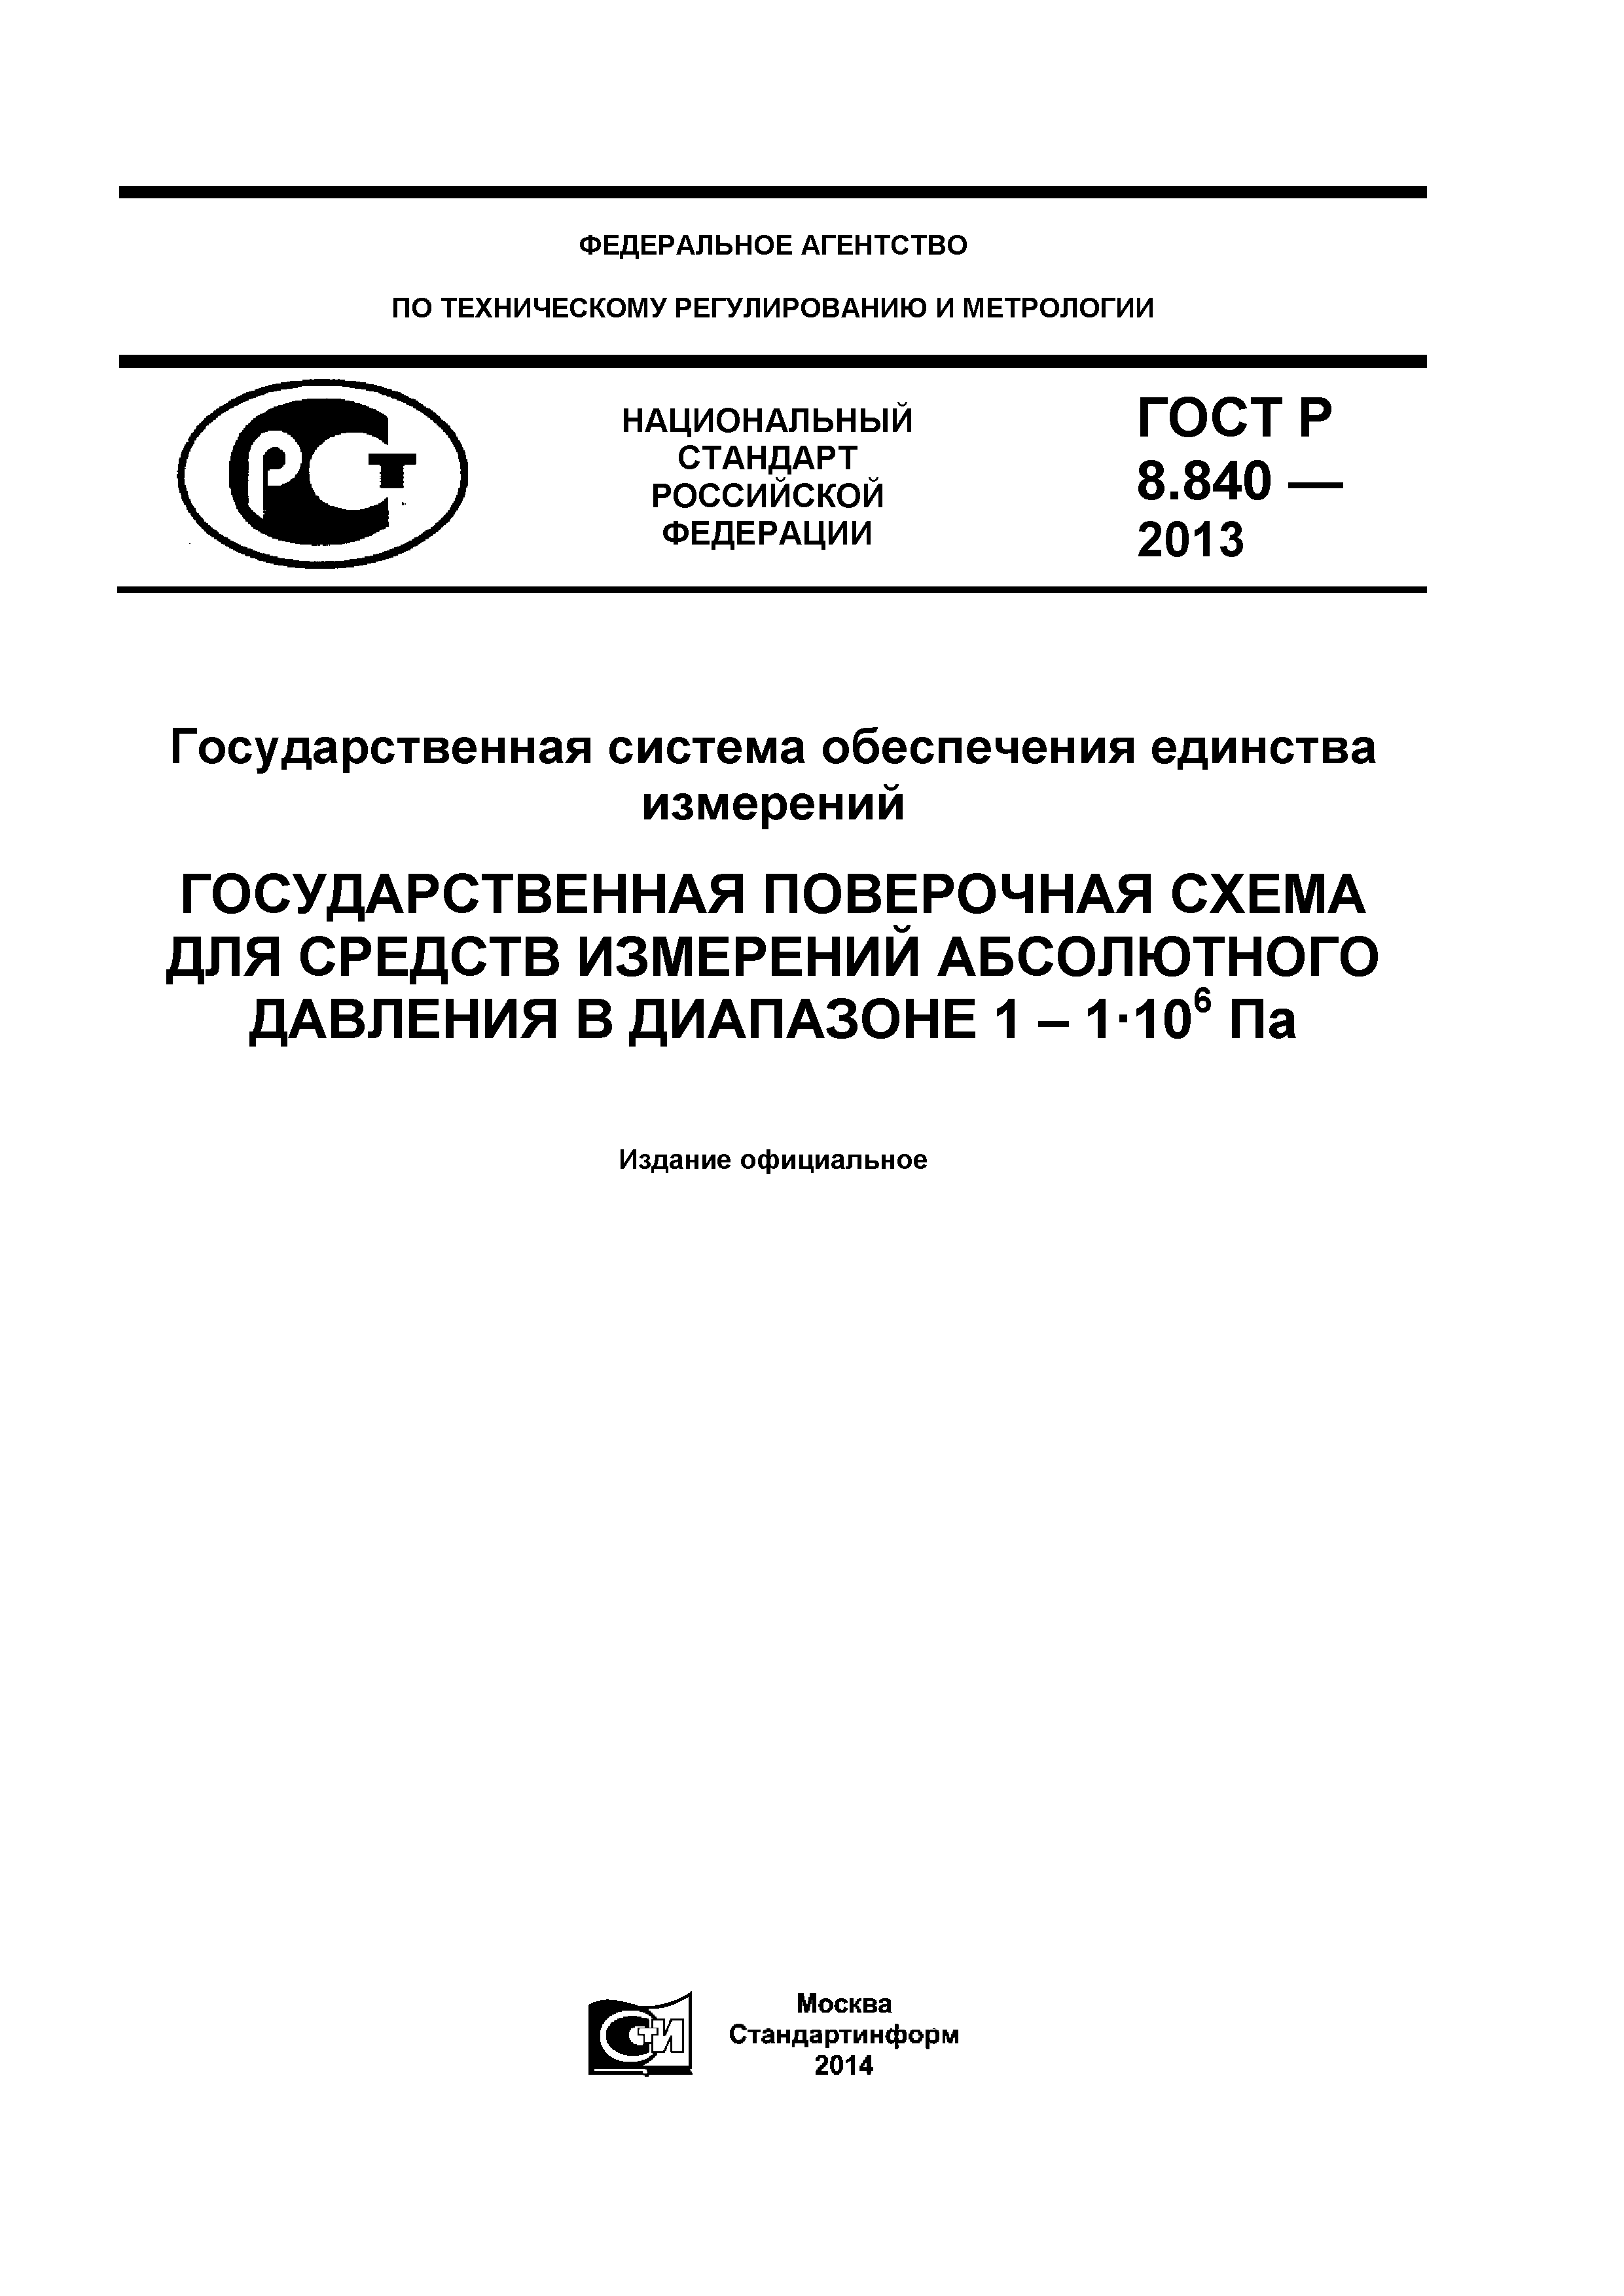 ГОСТ Р 8.840-2013